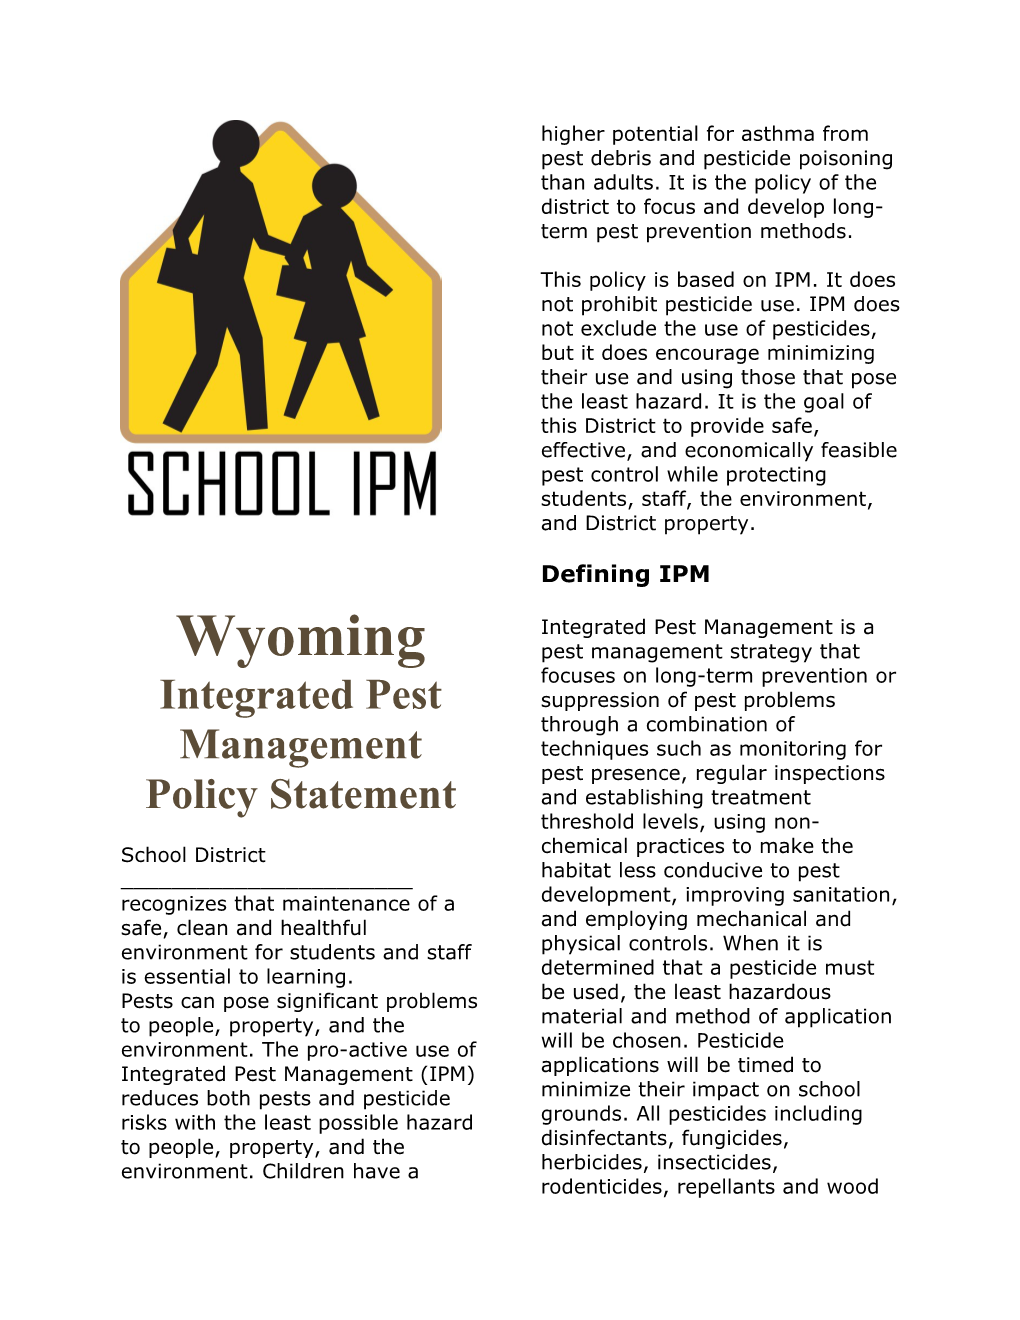 Wyomingintegrated Pest Management Policystatement